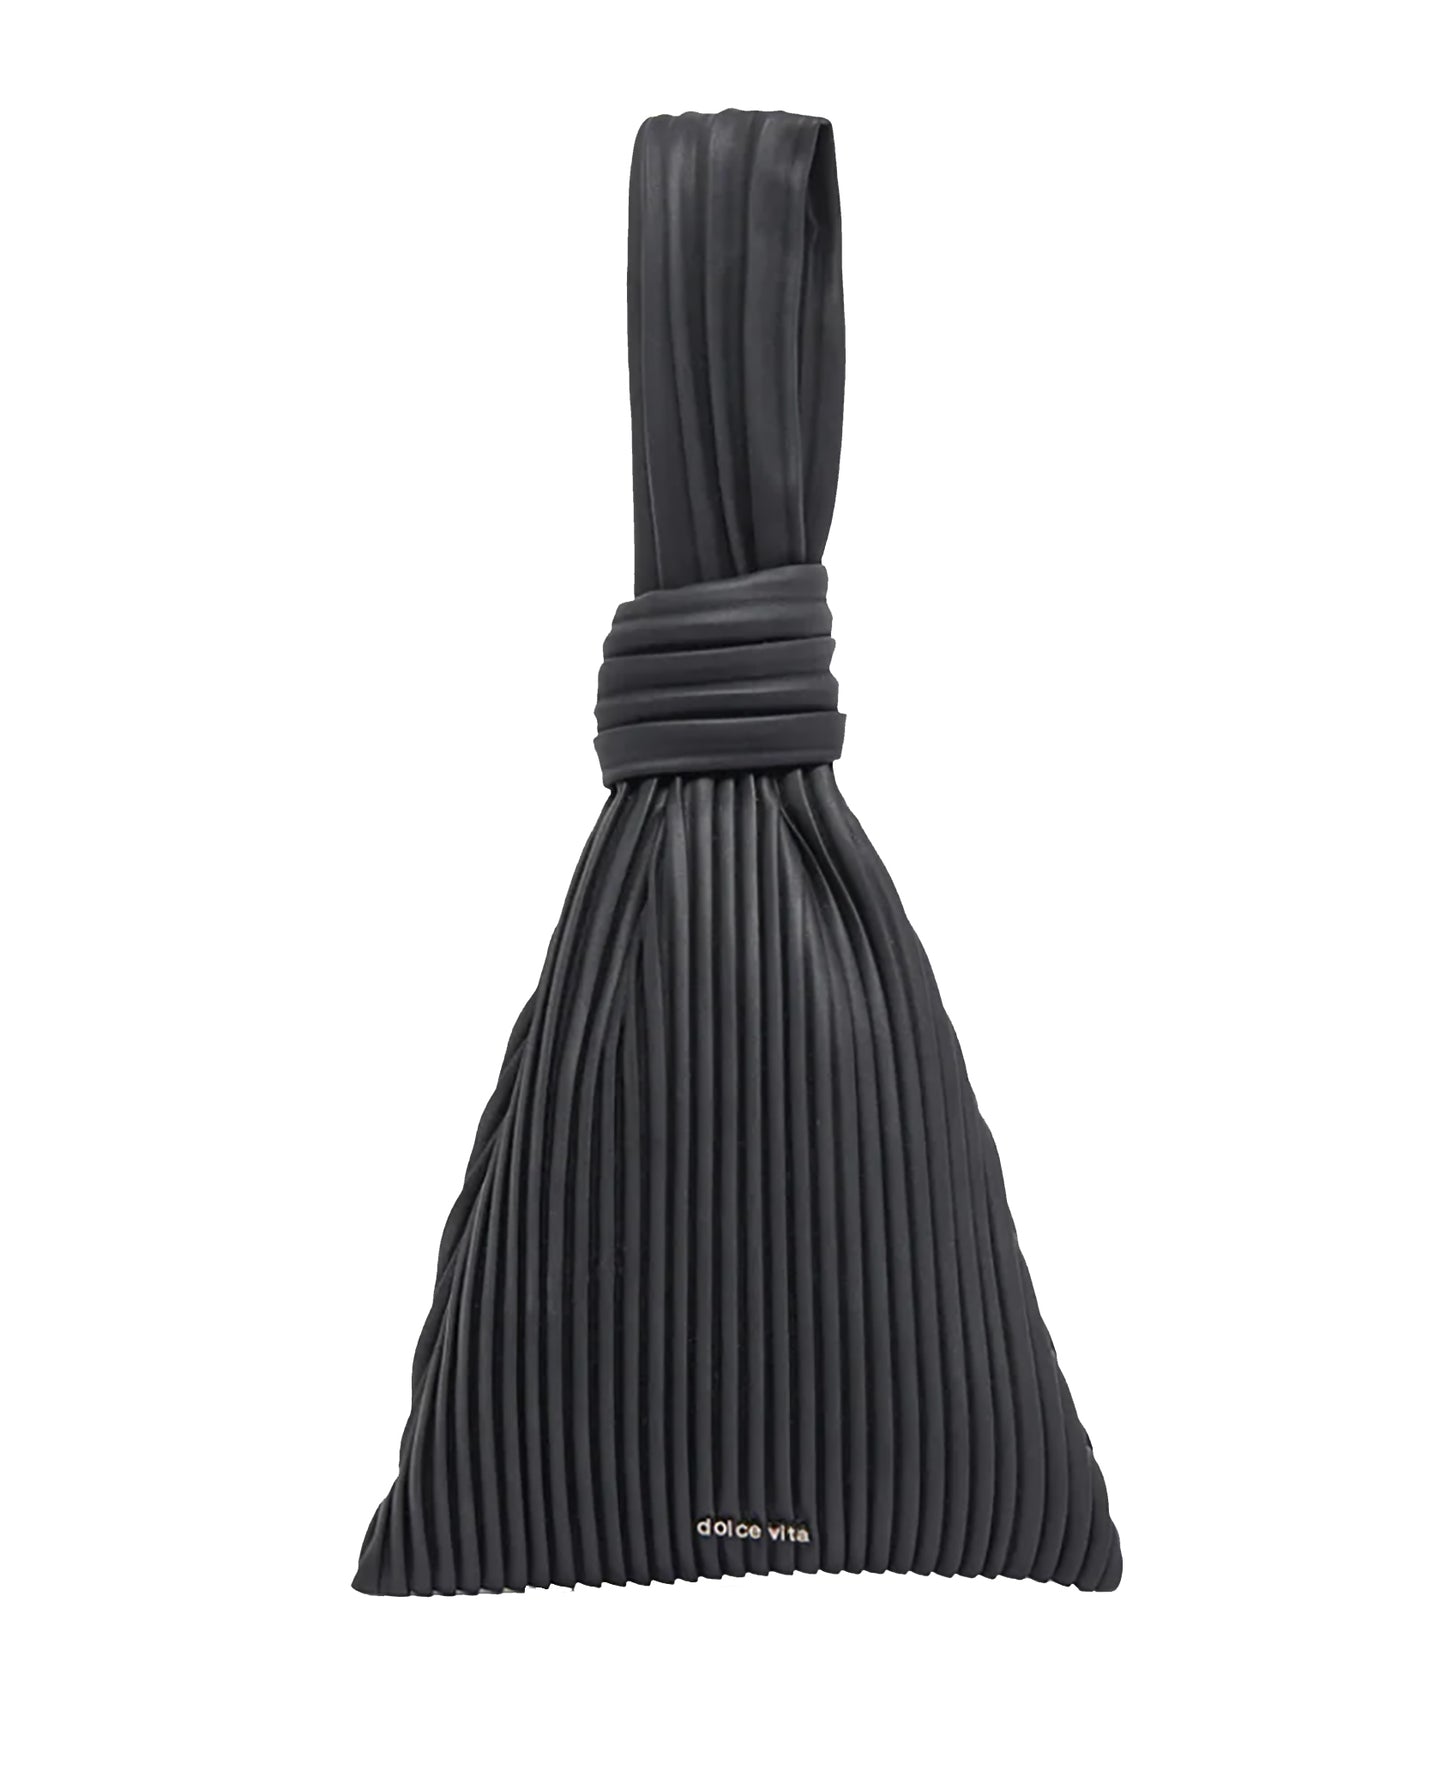 Carey Handbag: Black Leather